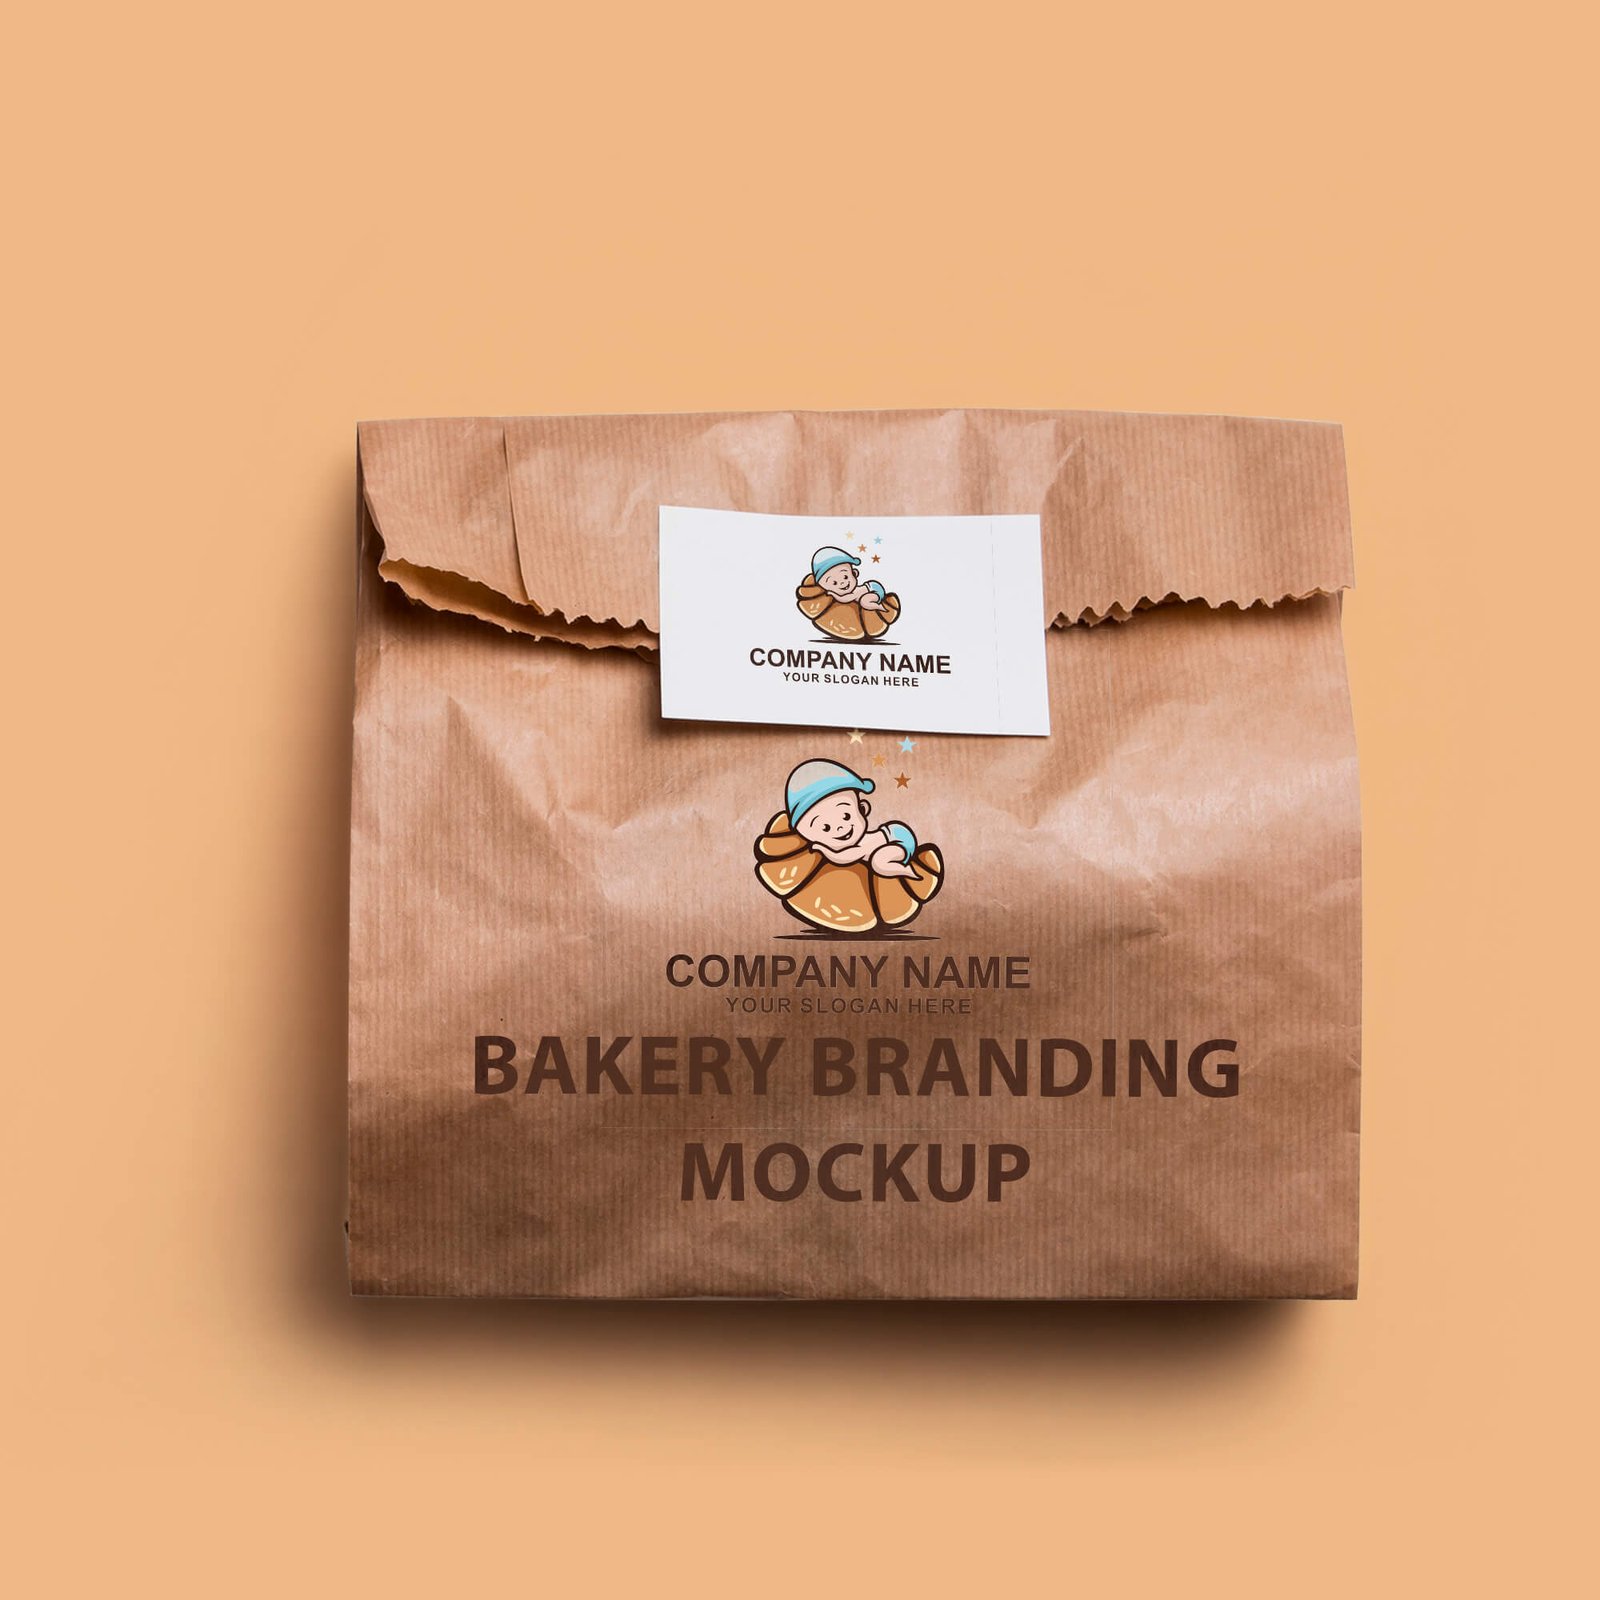 Design Free Bakery Branding Mockup PSD Template